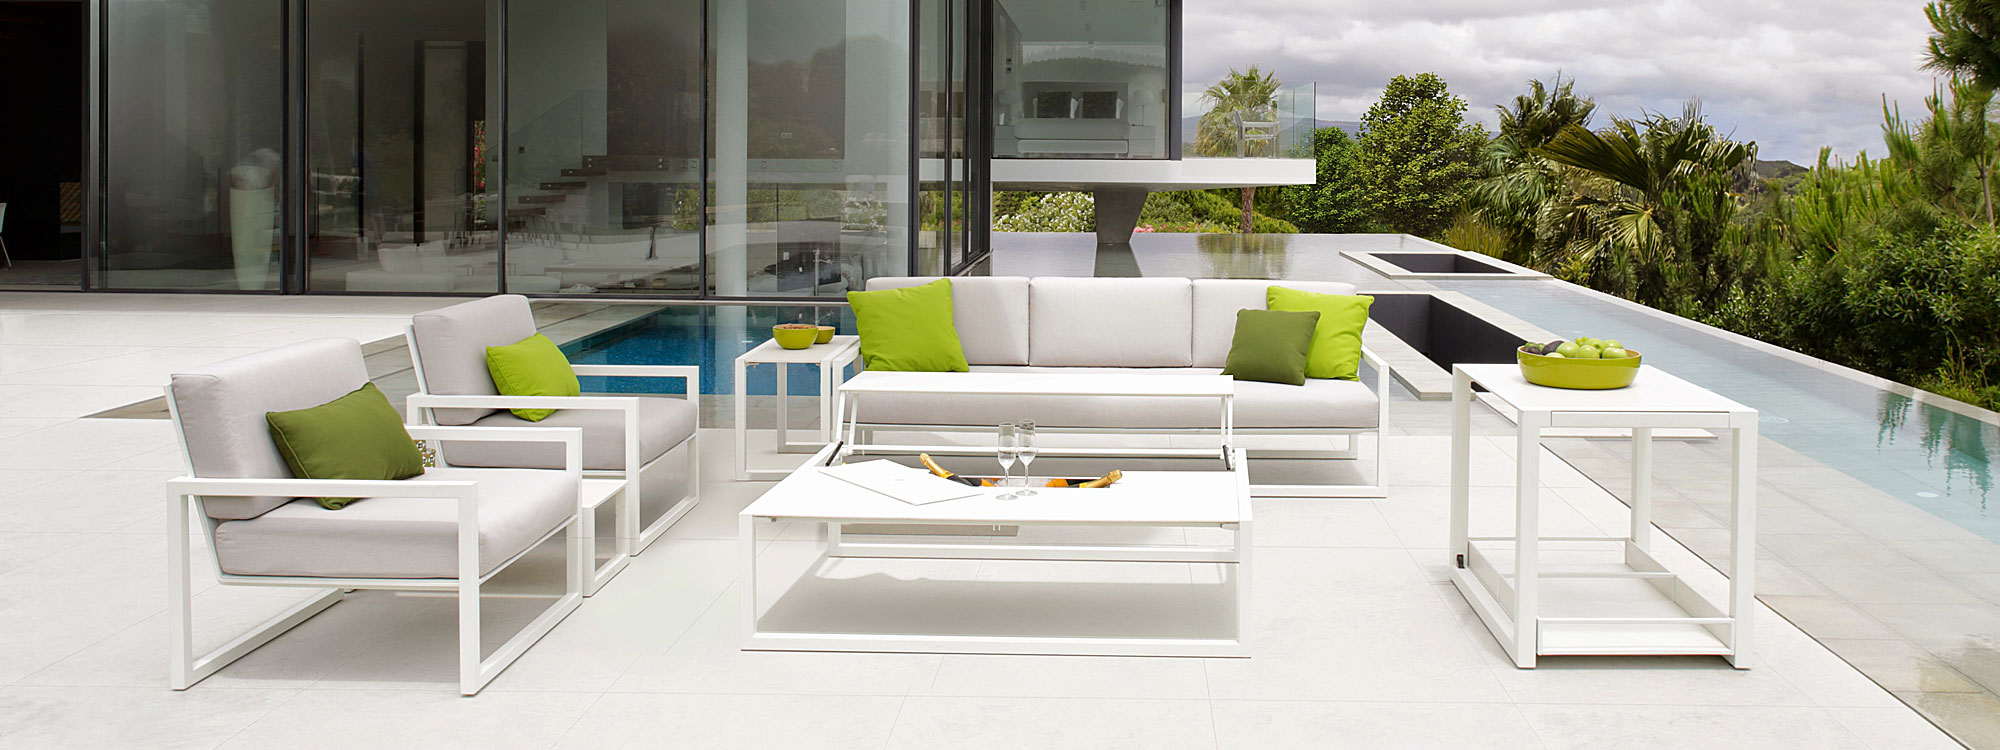 Image of white Ninix garden sofas with white upholstery by Royal Botania